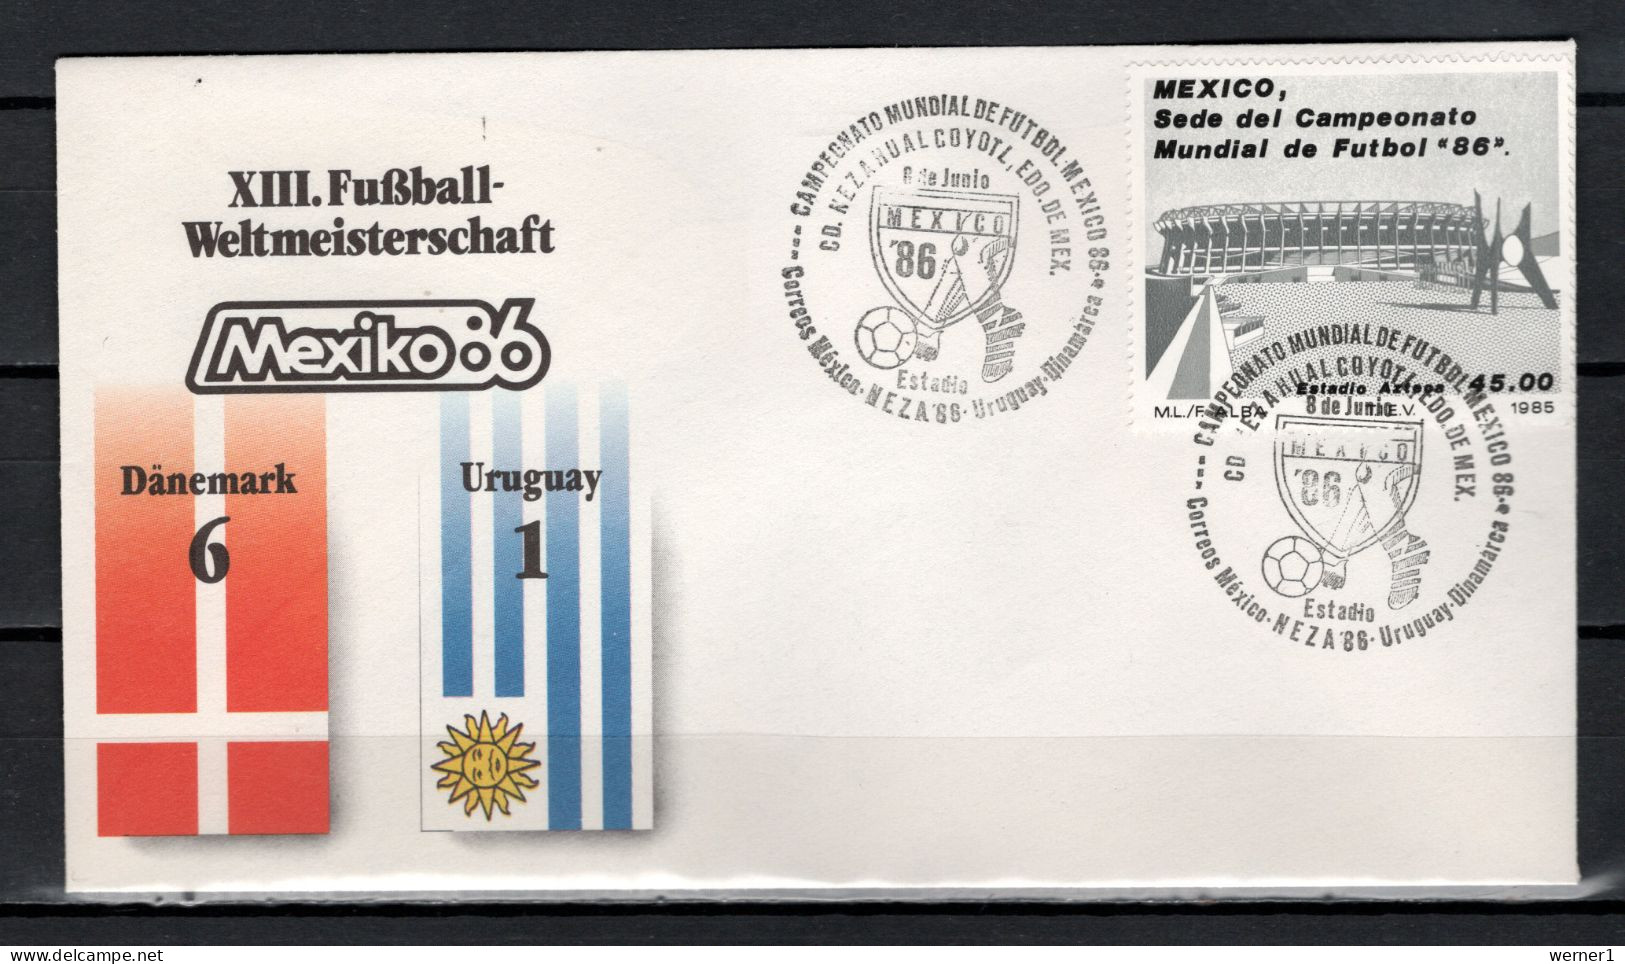 Mexico 1986 Football Soccer World Cup Commemorative Cover Match Denmark - Uruguay 6 : 1 - 1986 – Messico